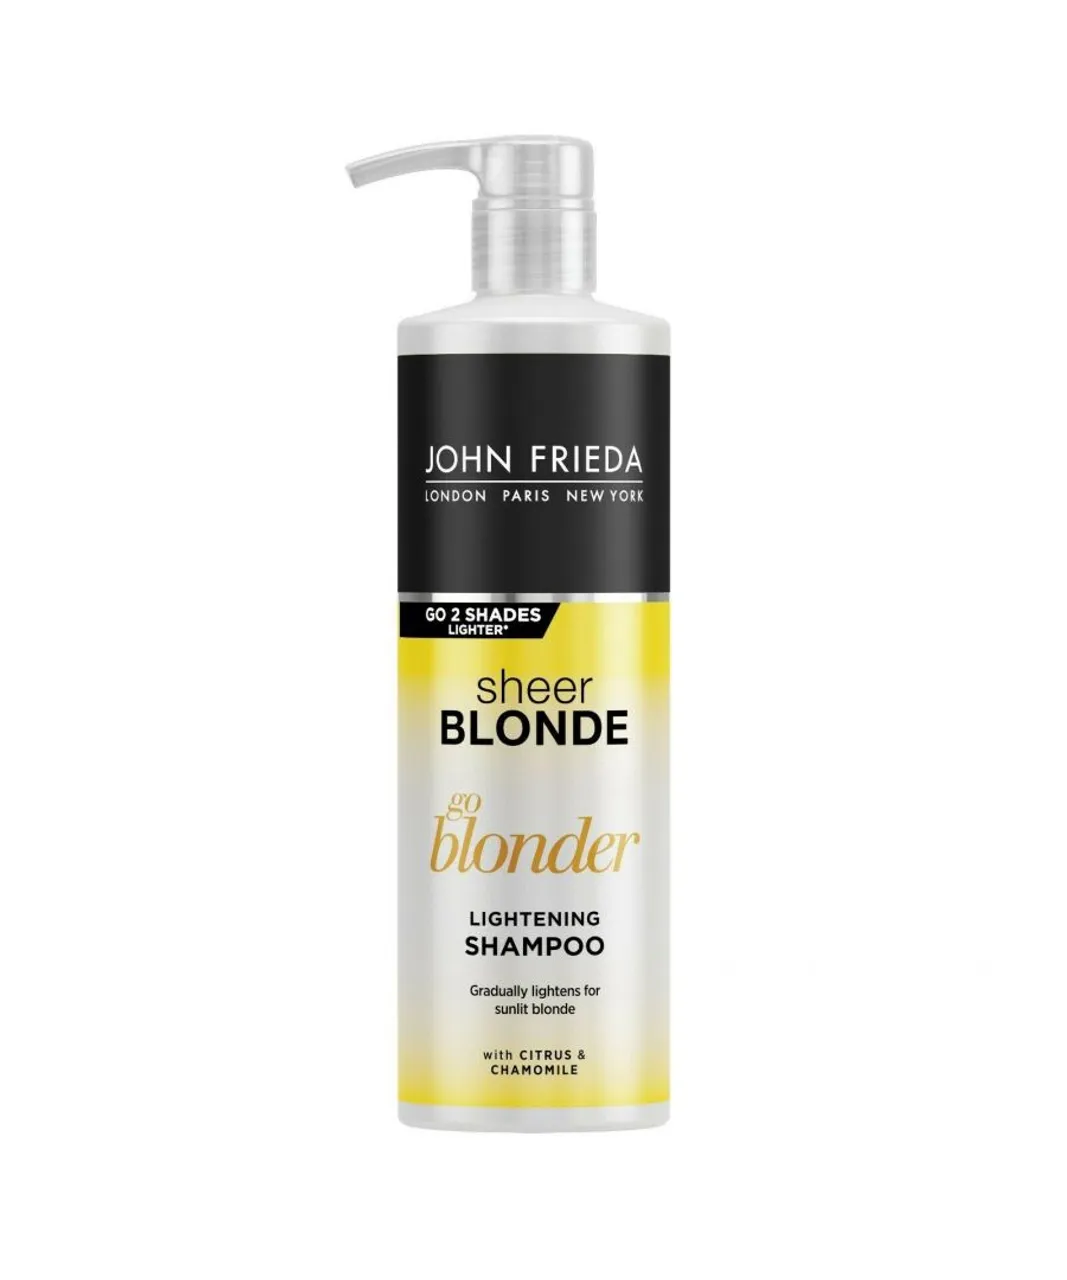 John Frieda Unisex Sheer Blonde Go Blonder Lightening Shampoo & Conditioner 500ml Duo Pack - NA - One Size